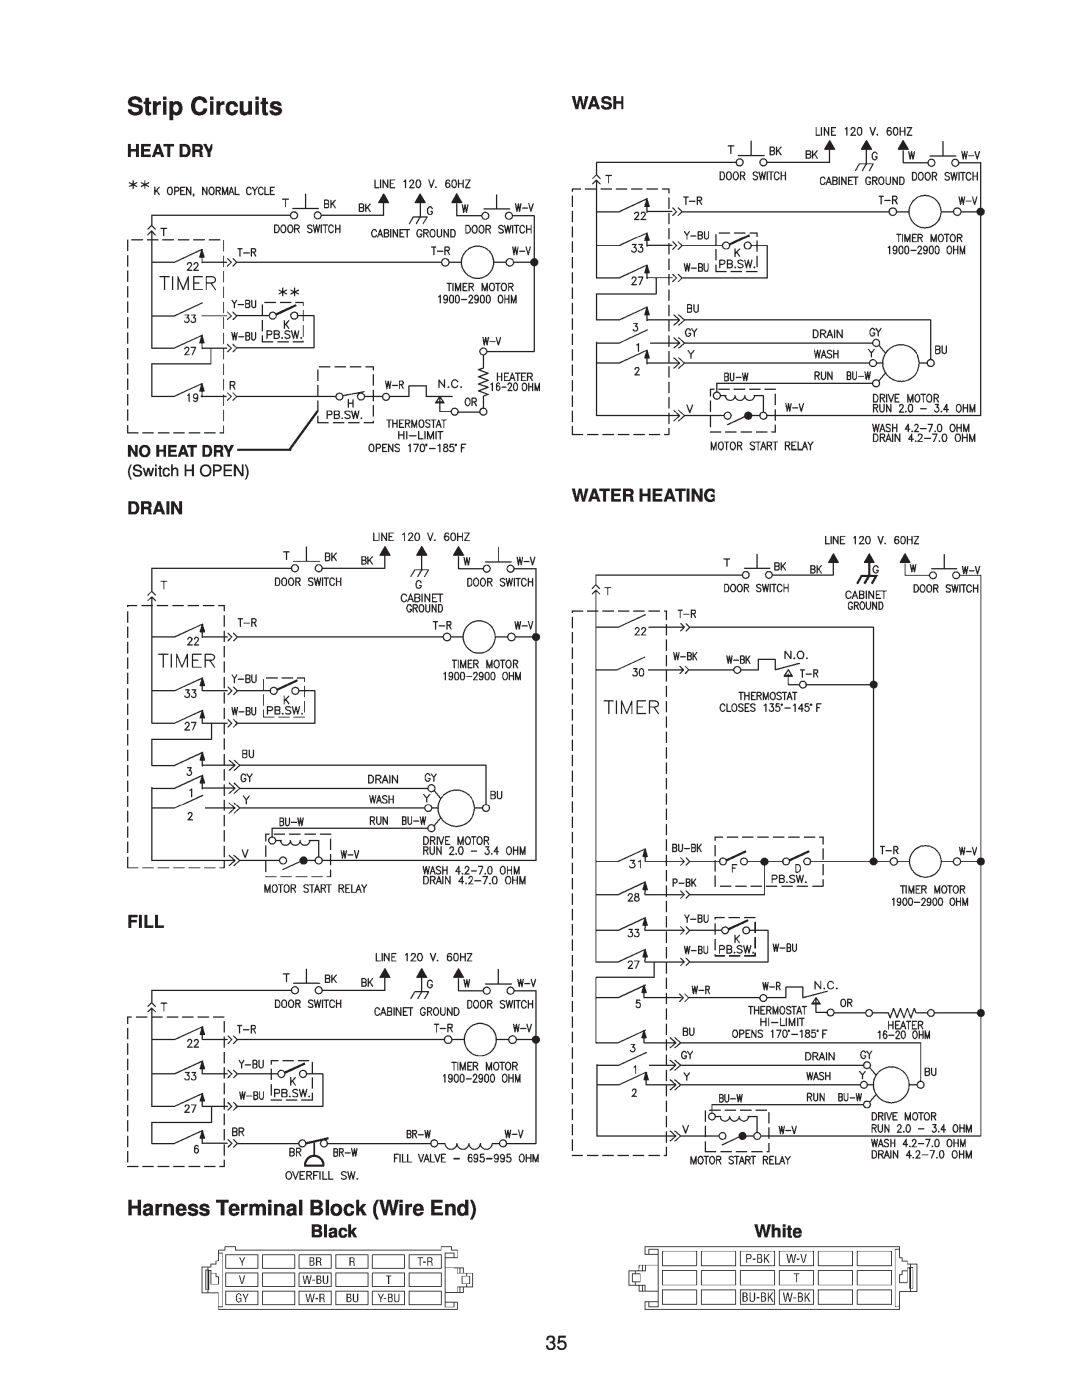 Kenmore DU805DWG manual Strip Circuits, Harness Terminal Block Wire End, WASH Steps 2 - 7, 10 - 12, 15 - 20, 24 - 28, Black 